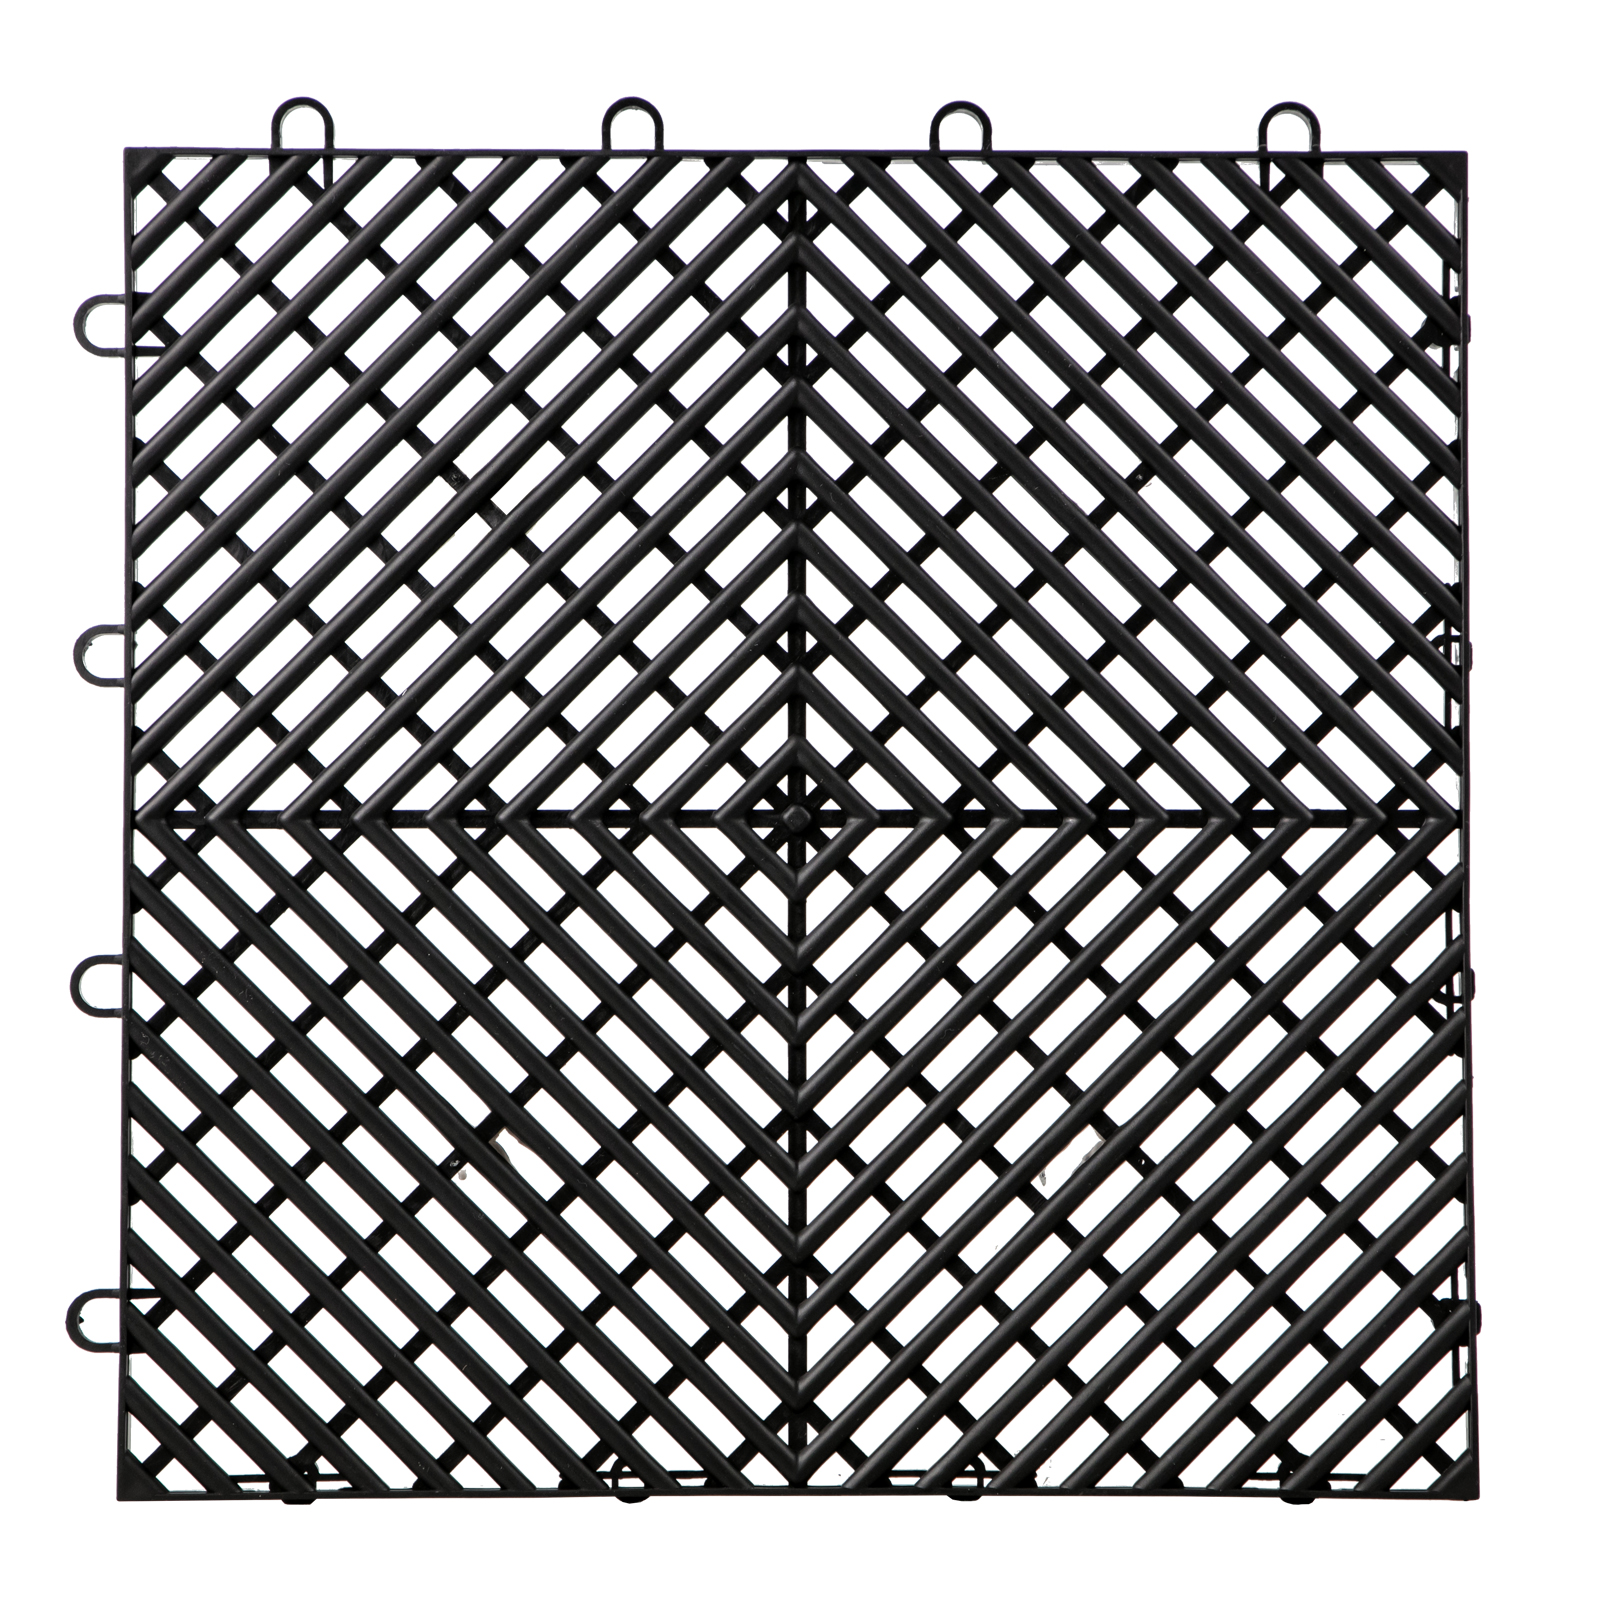 Nitro Tiles Interlocking Garage Floor Tiles 12x12x0.5inch 55pcs Deck Tile Black от Vevor Many GEOs